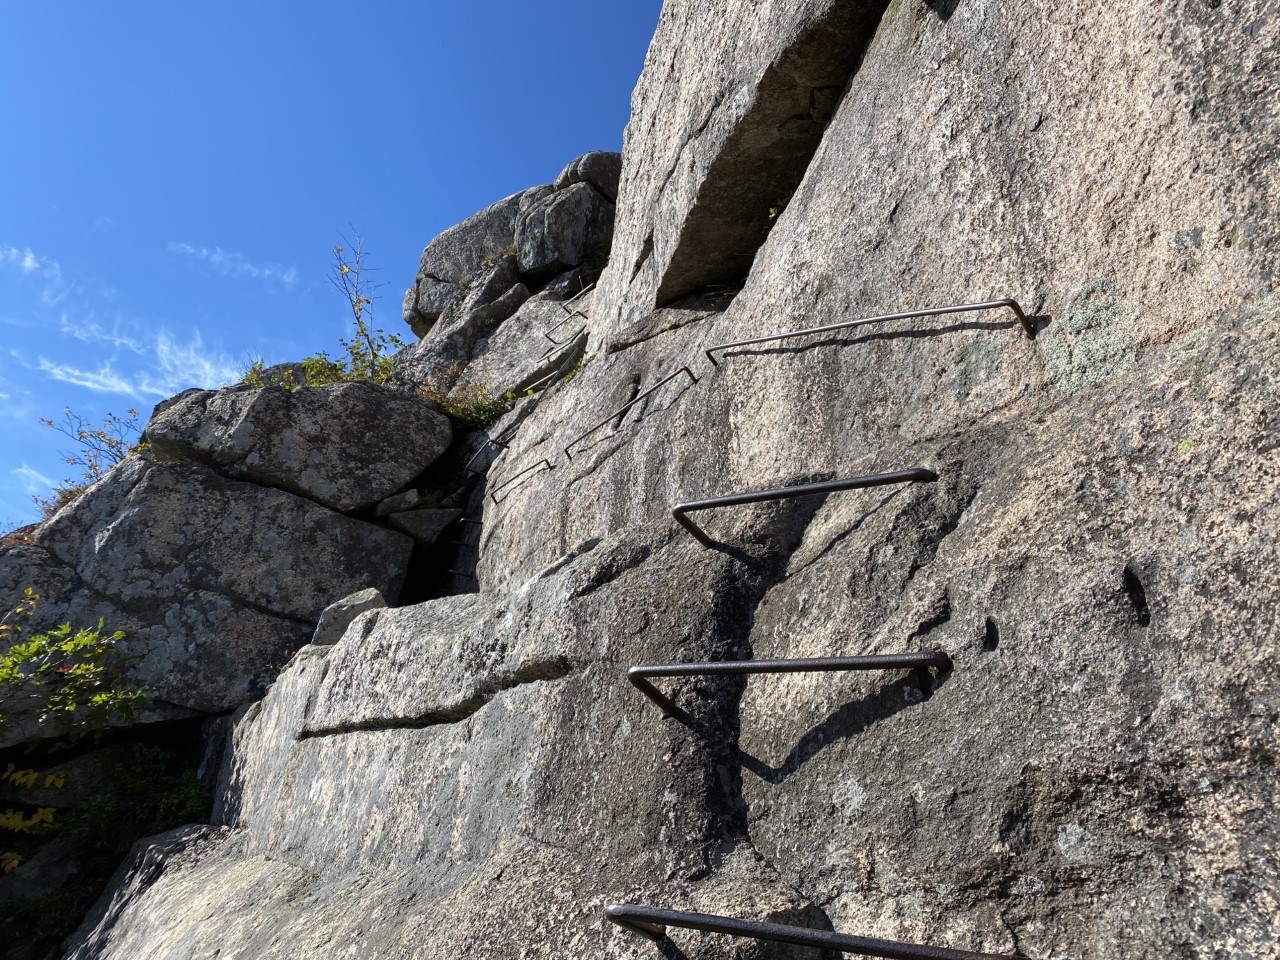 Iron Rungs on the precipice trail